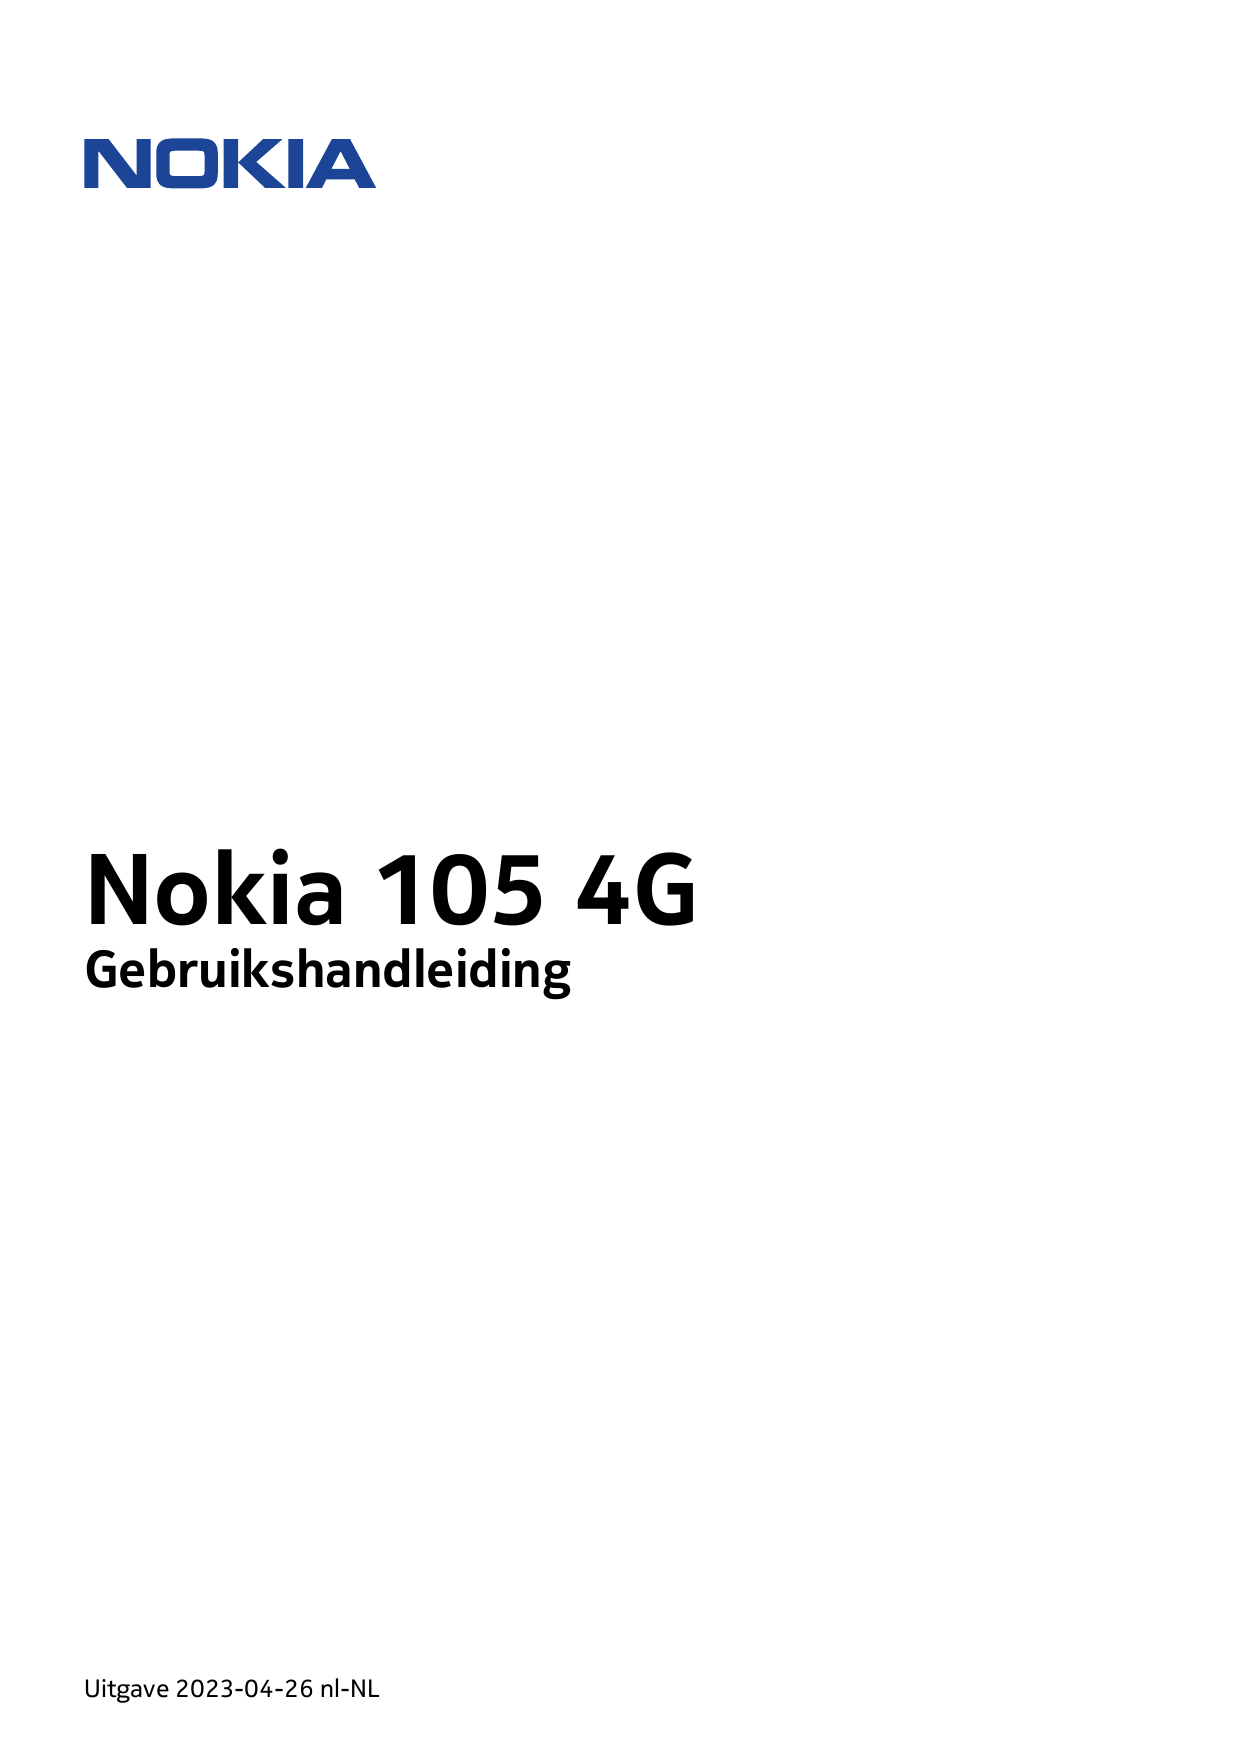 Nokia 105 4GGebruikshandleidingUitgave 2023-04-26 nl-NL